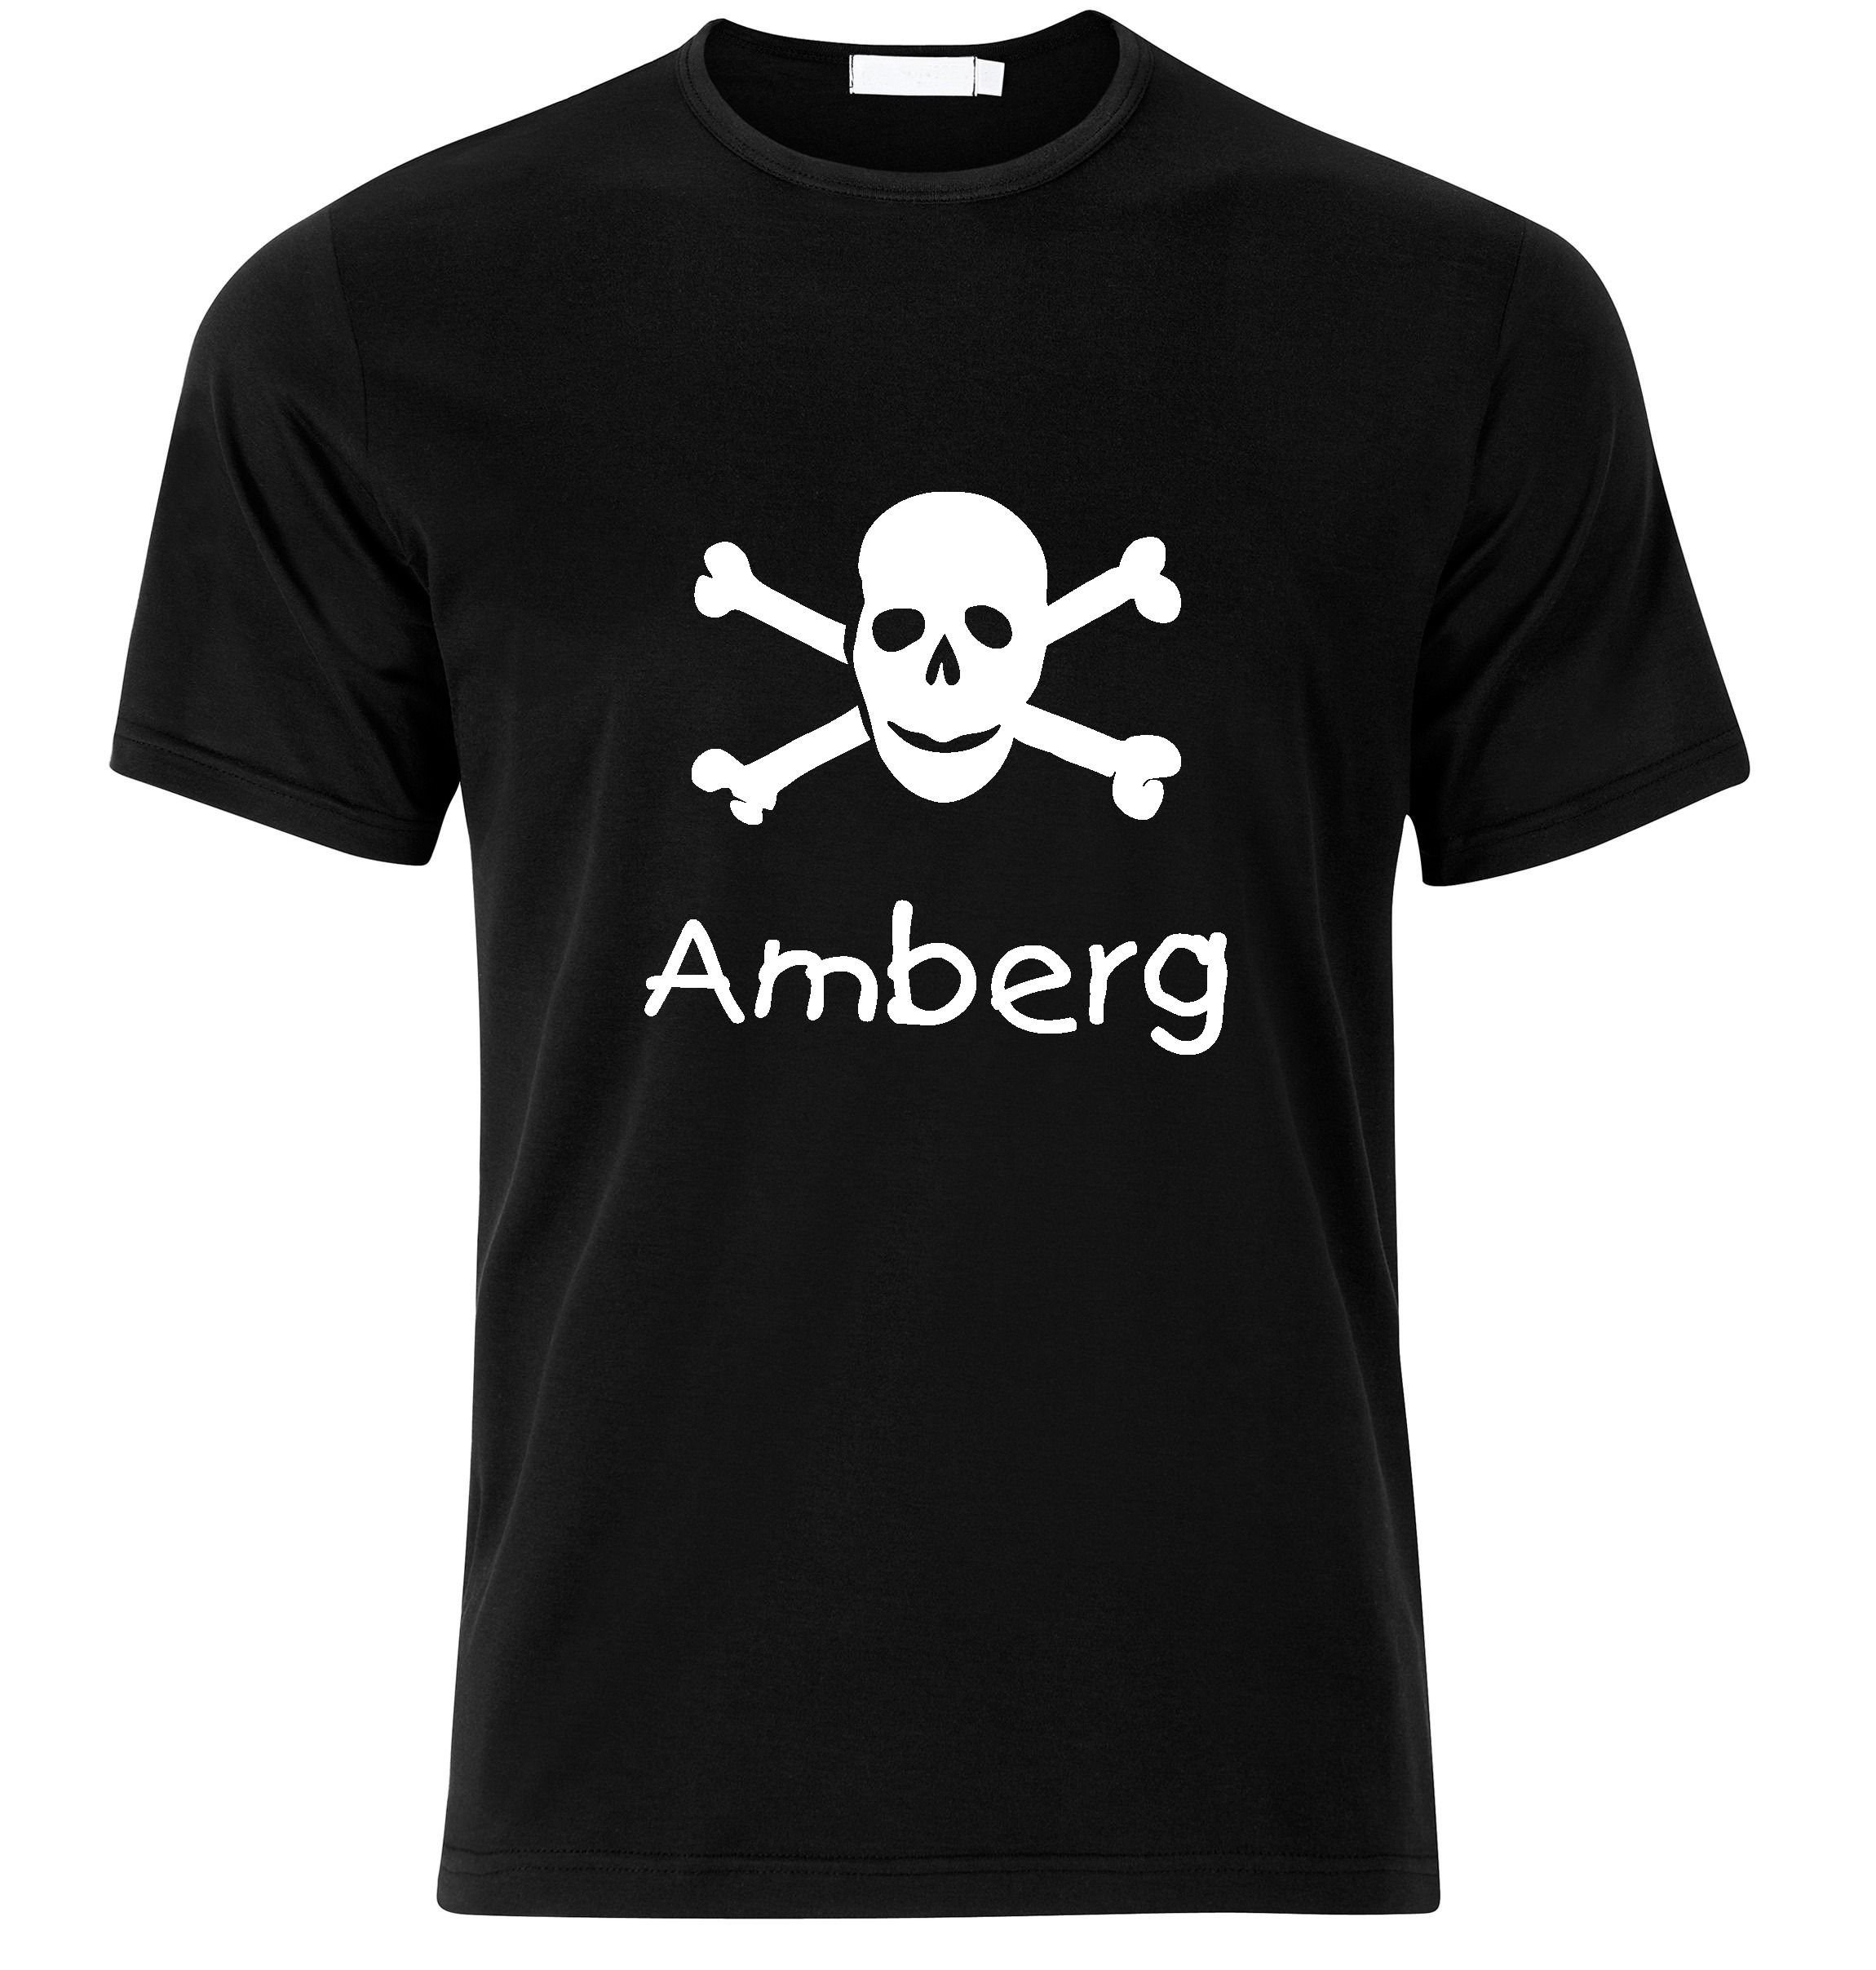 T-Shirt Amberg Jolly Roger, Totenkopf